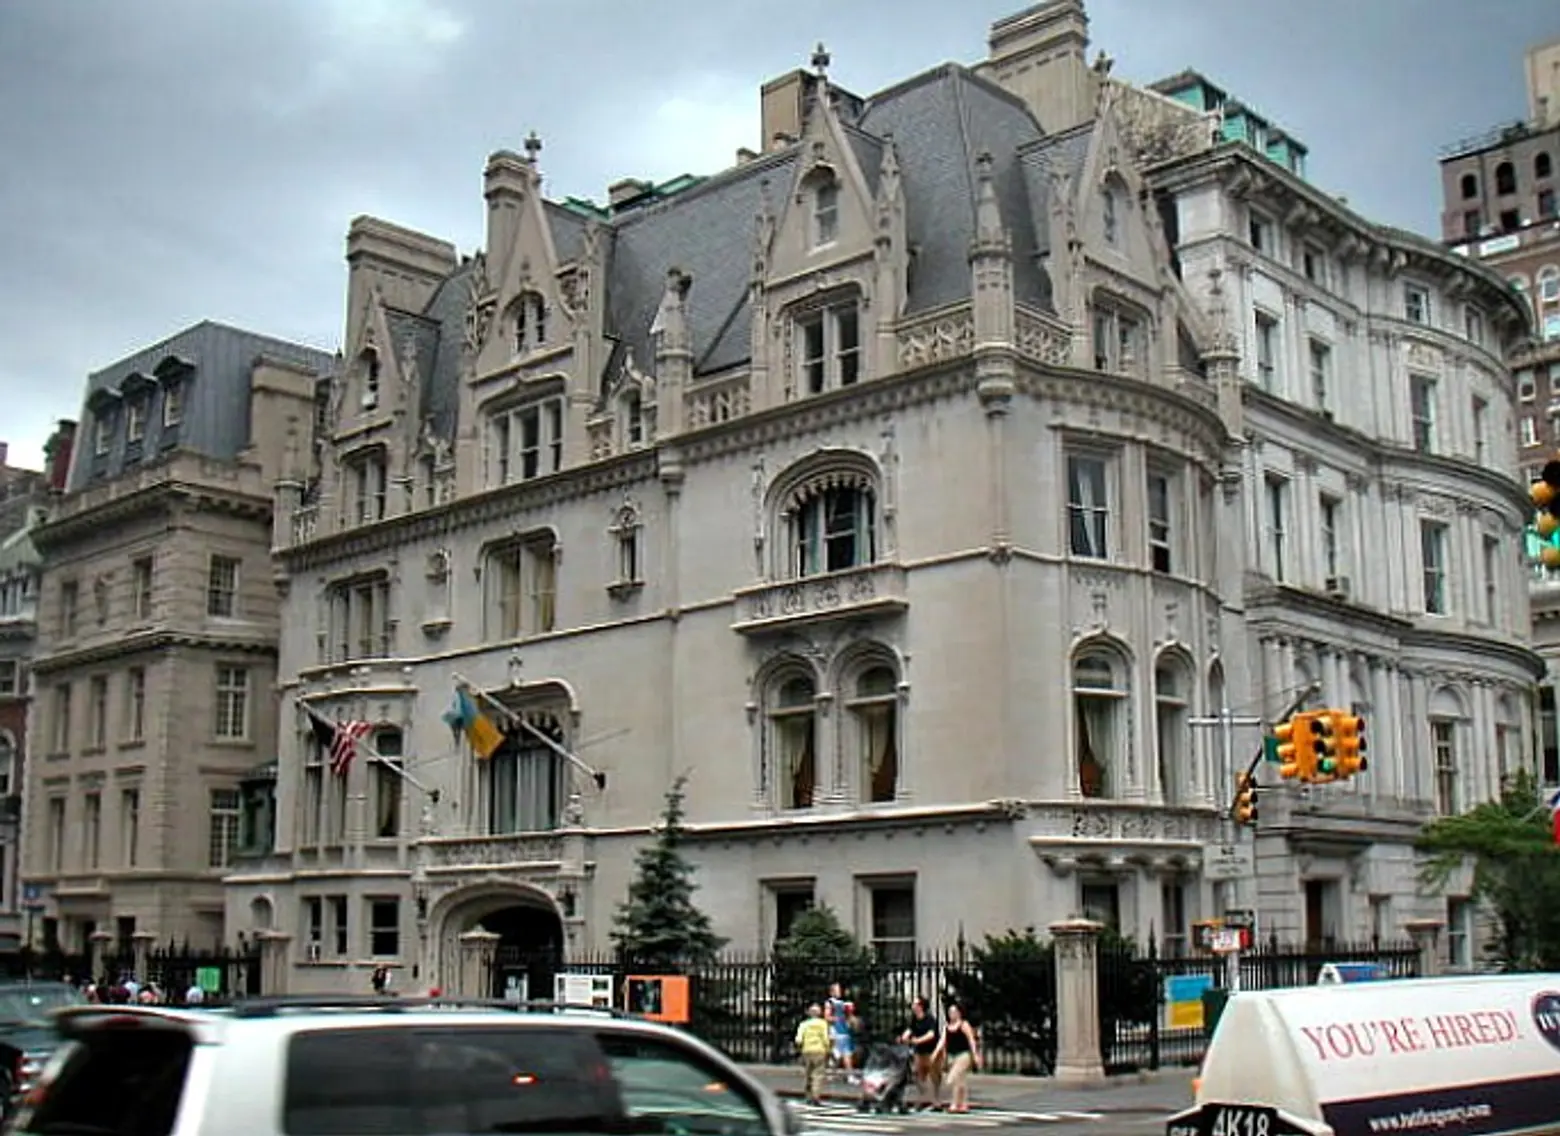 Fletcher-Sinclair Mansion, 2 East 79th Street, Ukrainian Institute of America